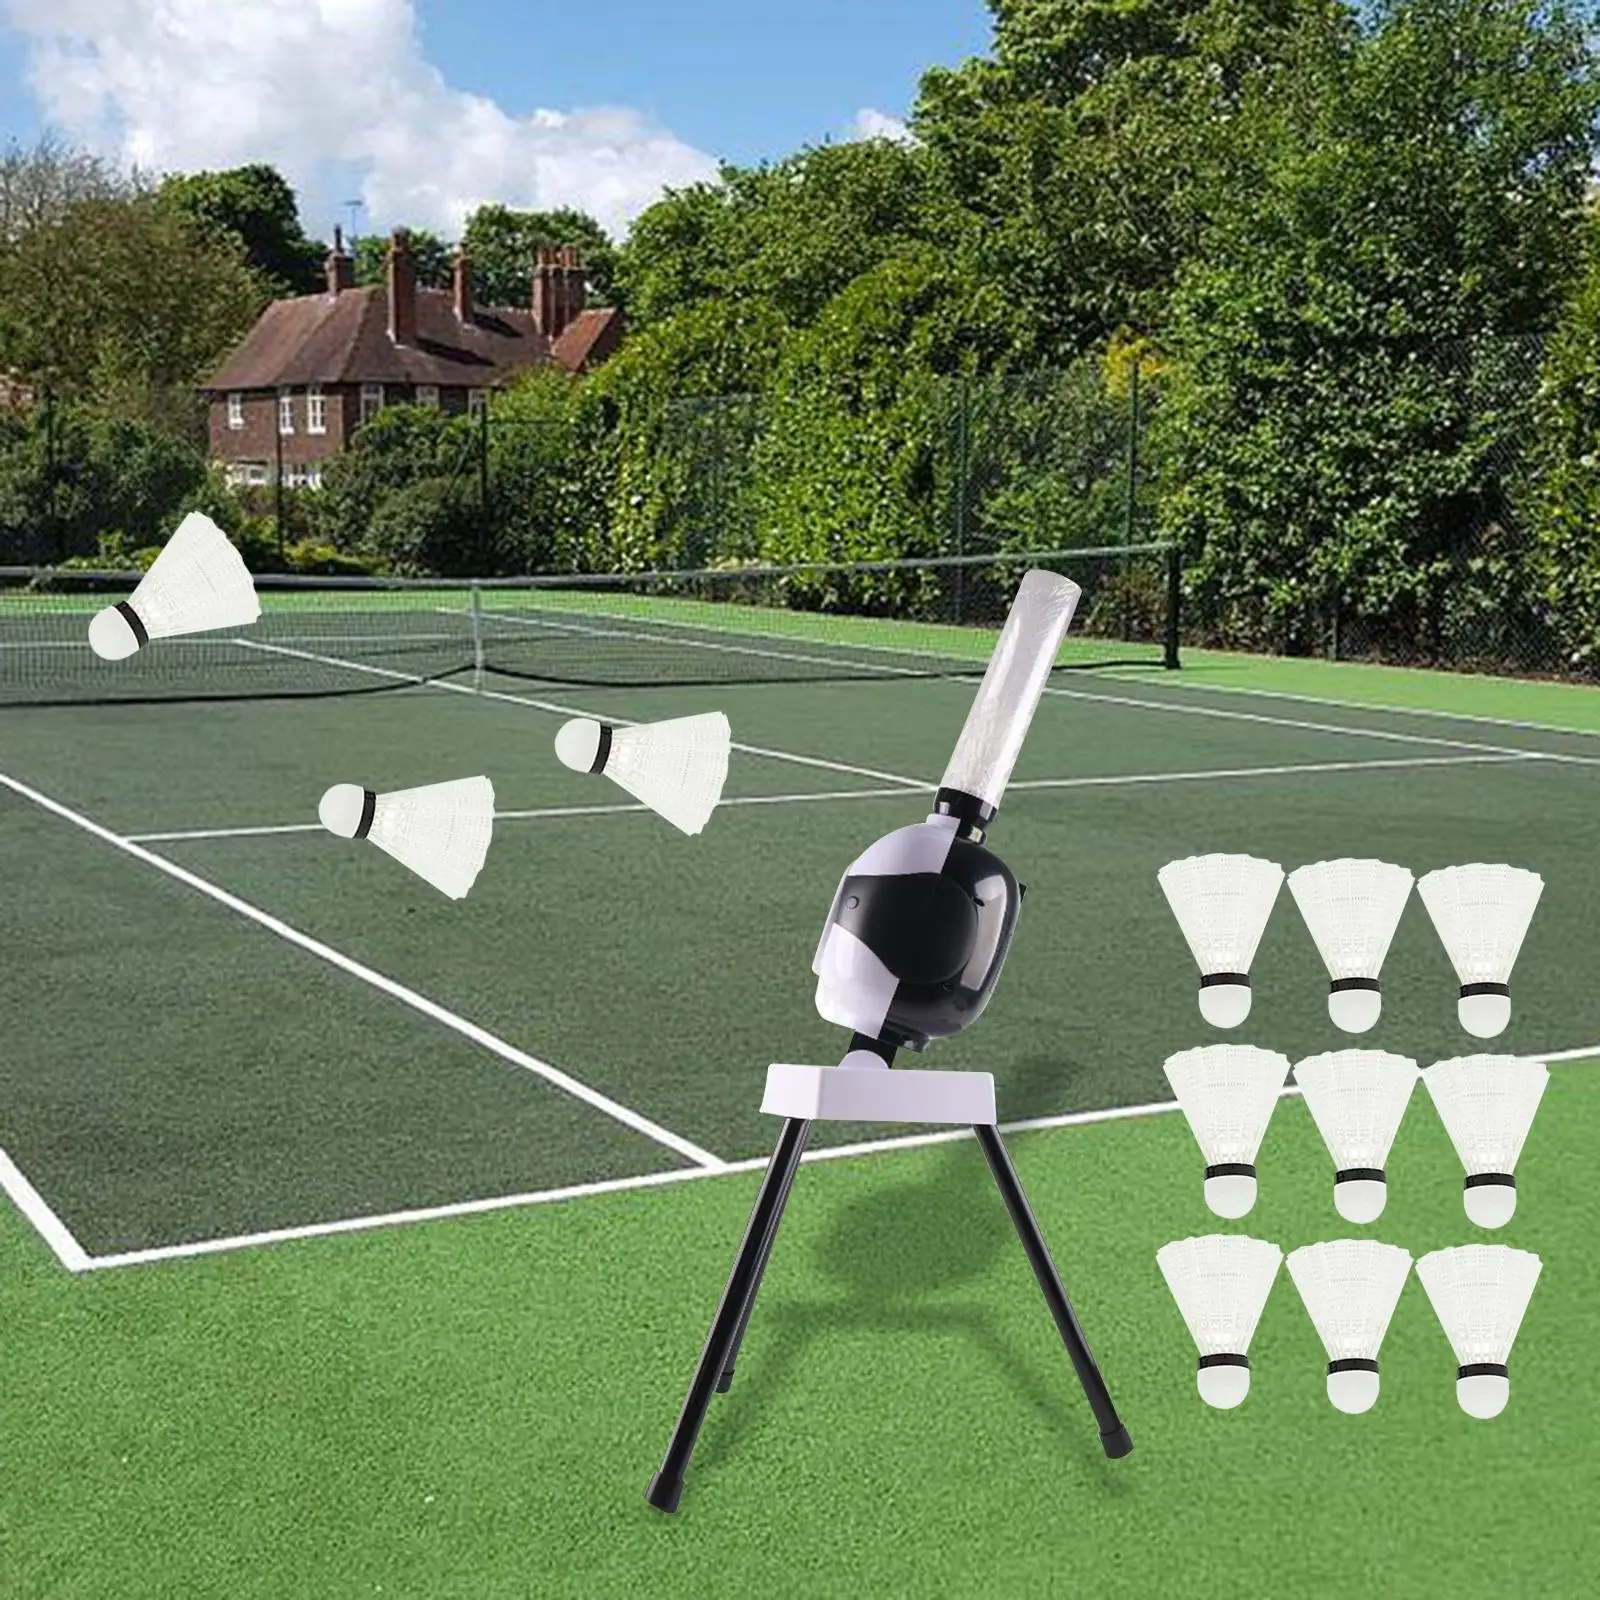 Automatic Badminton Serve Machine Badminton Ball Tosser Badminton Trainer for Kids